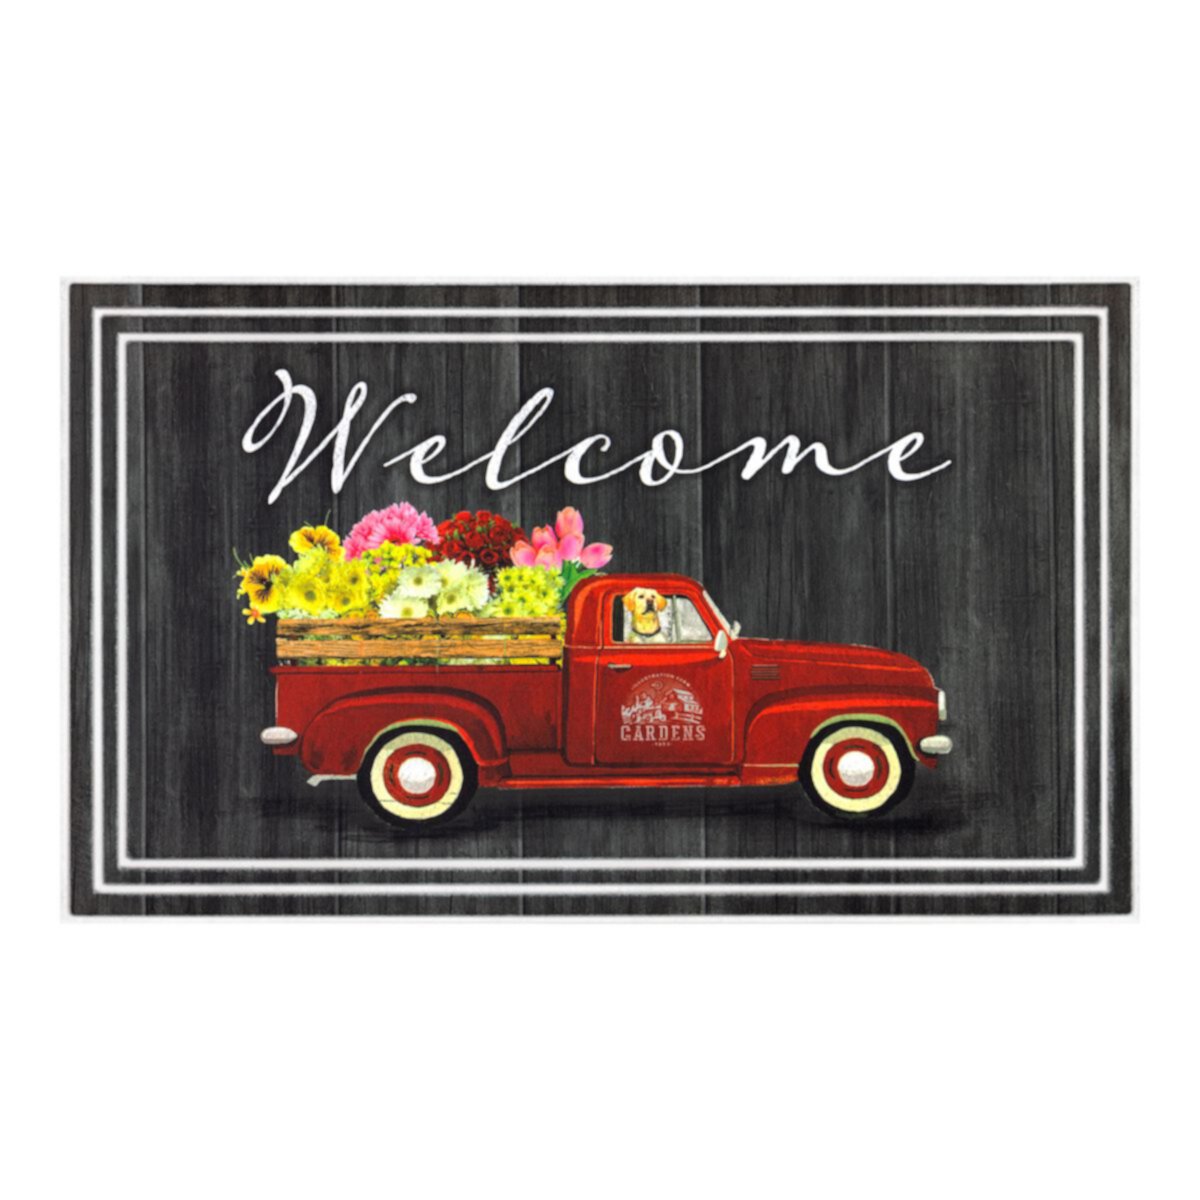 Fashionables Deluxe Welcome Цветочный сад и коврик для грузовика Apache Mills